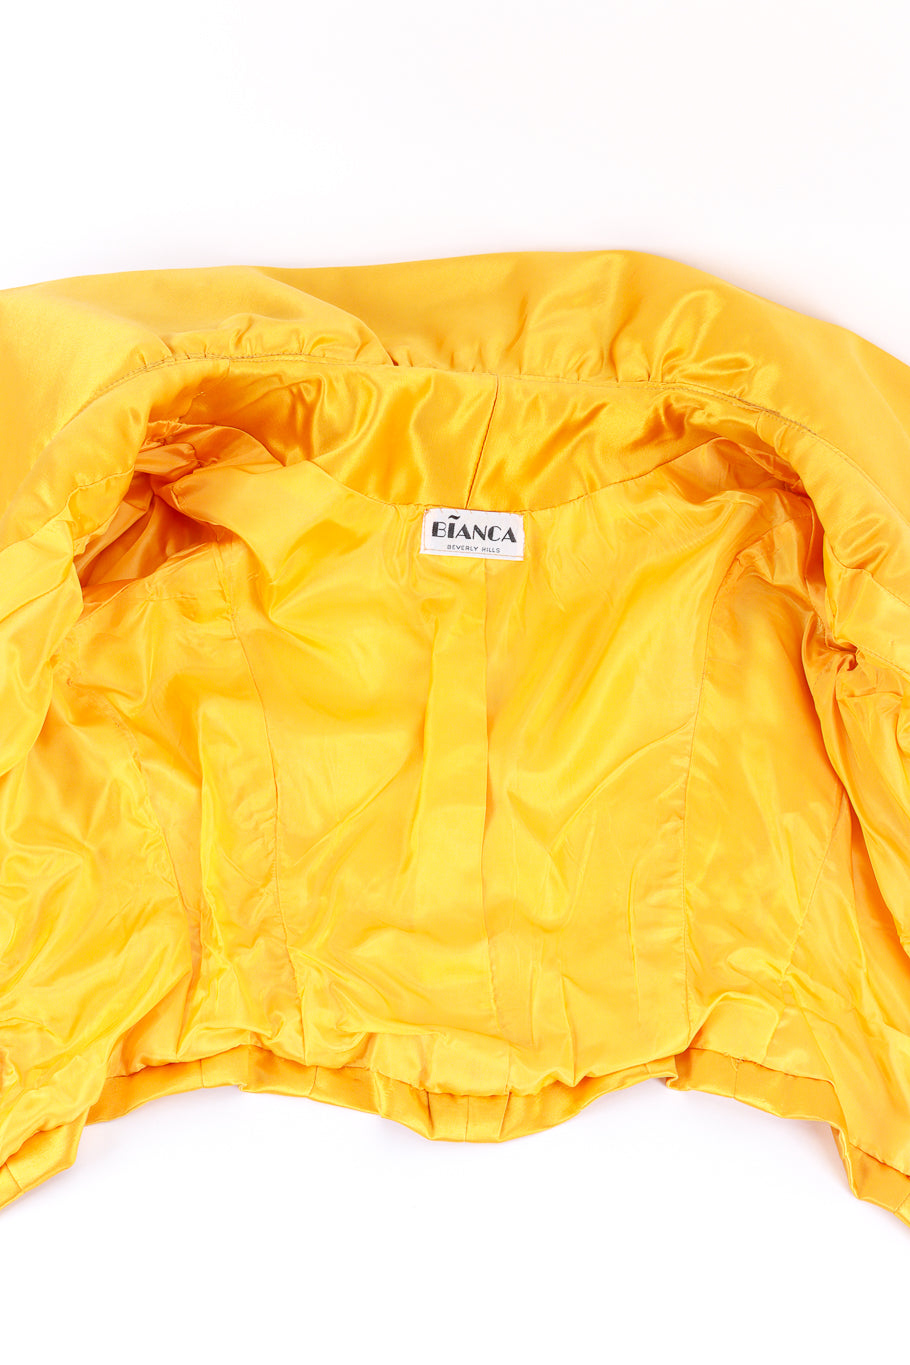 Vintage Biana Shawl Wrap Crop Jacket view of lining @recess la